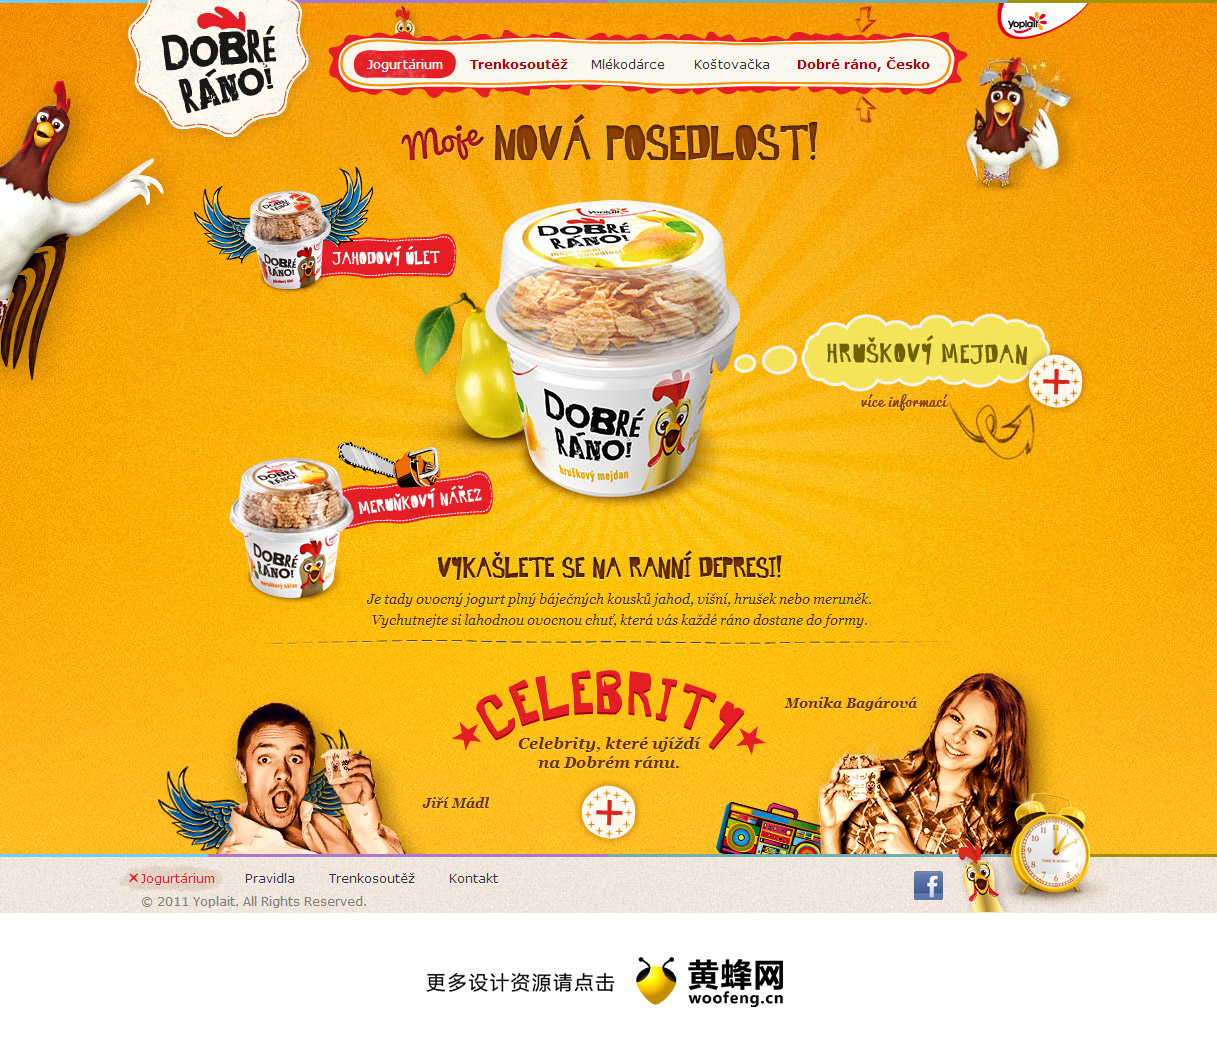 Dobre rano水果酸奶，来源自黄蜂网https://woofeng.cn/web/